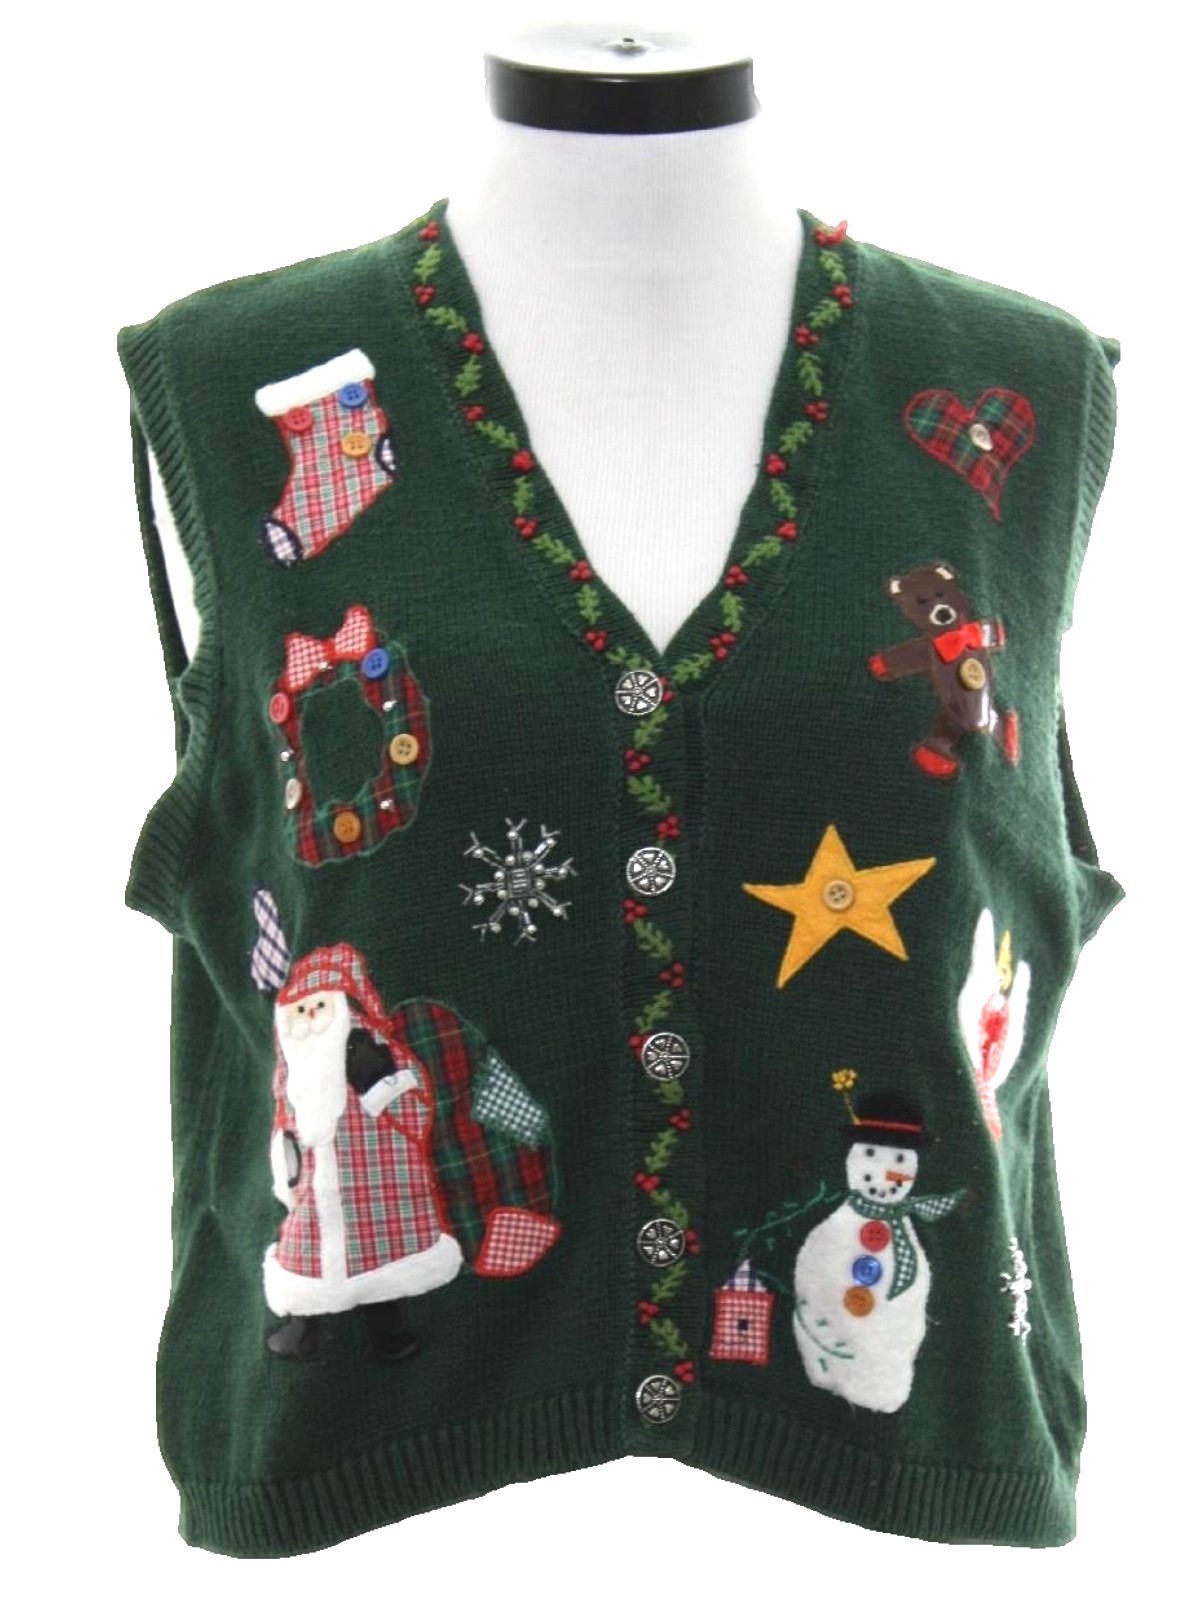 Womens Country Kitsch Ugly Christmas Sweater Vest: -Karen Scott- Womens ...